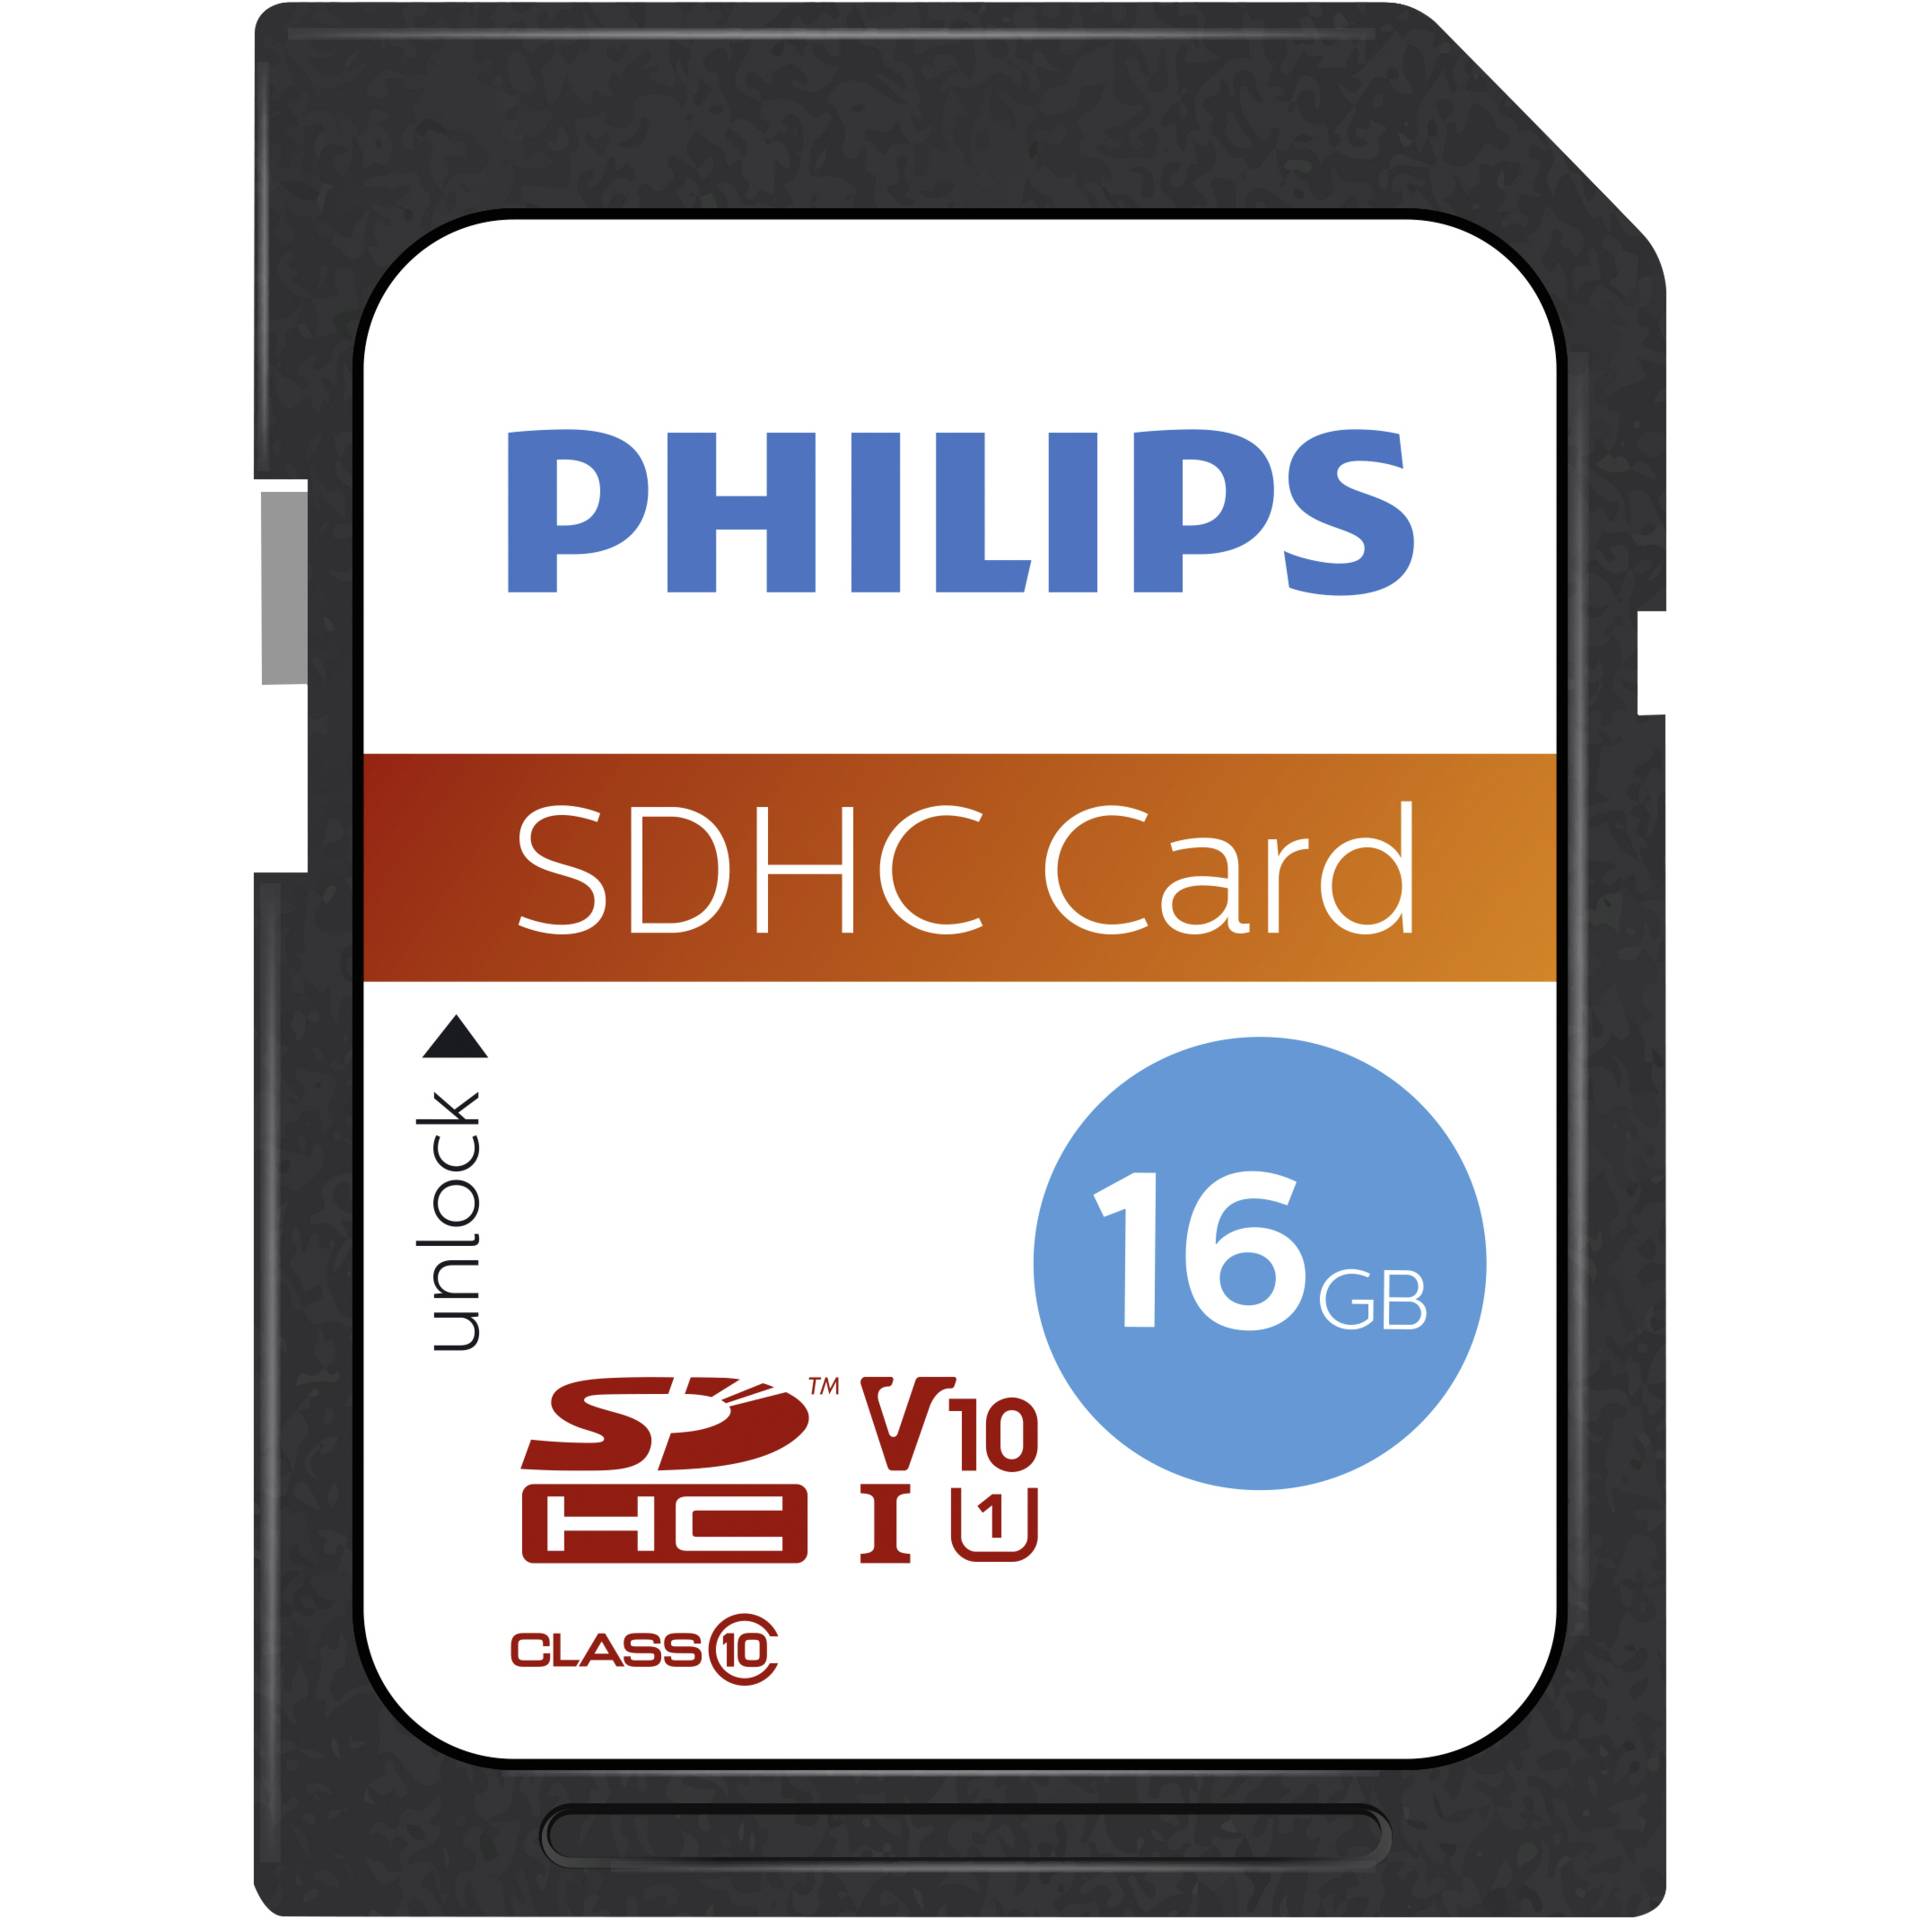 Philips SDHC Card           16GB Class 10 UHS-I U1